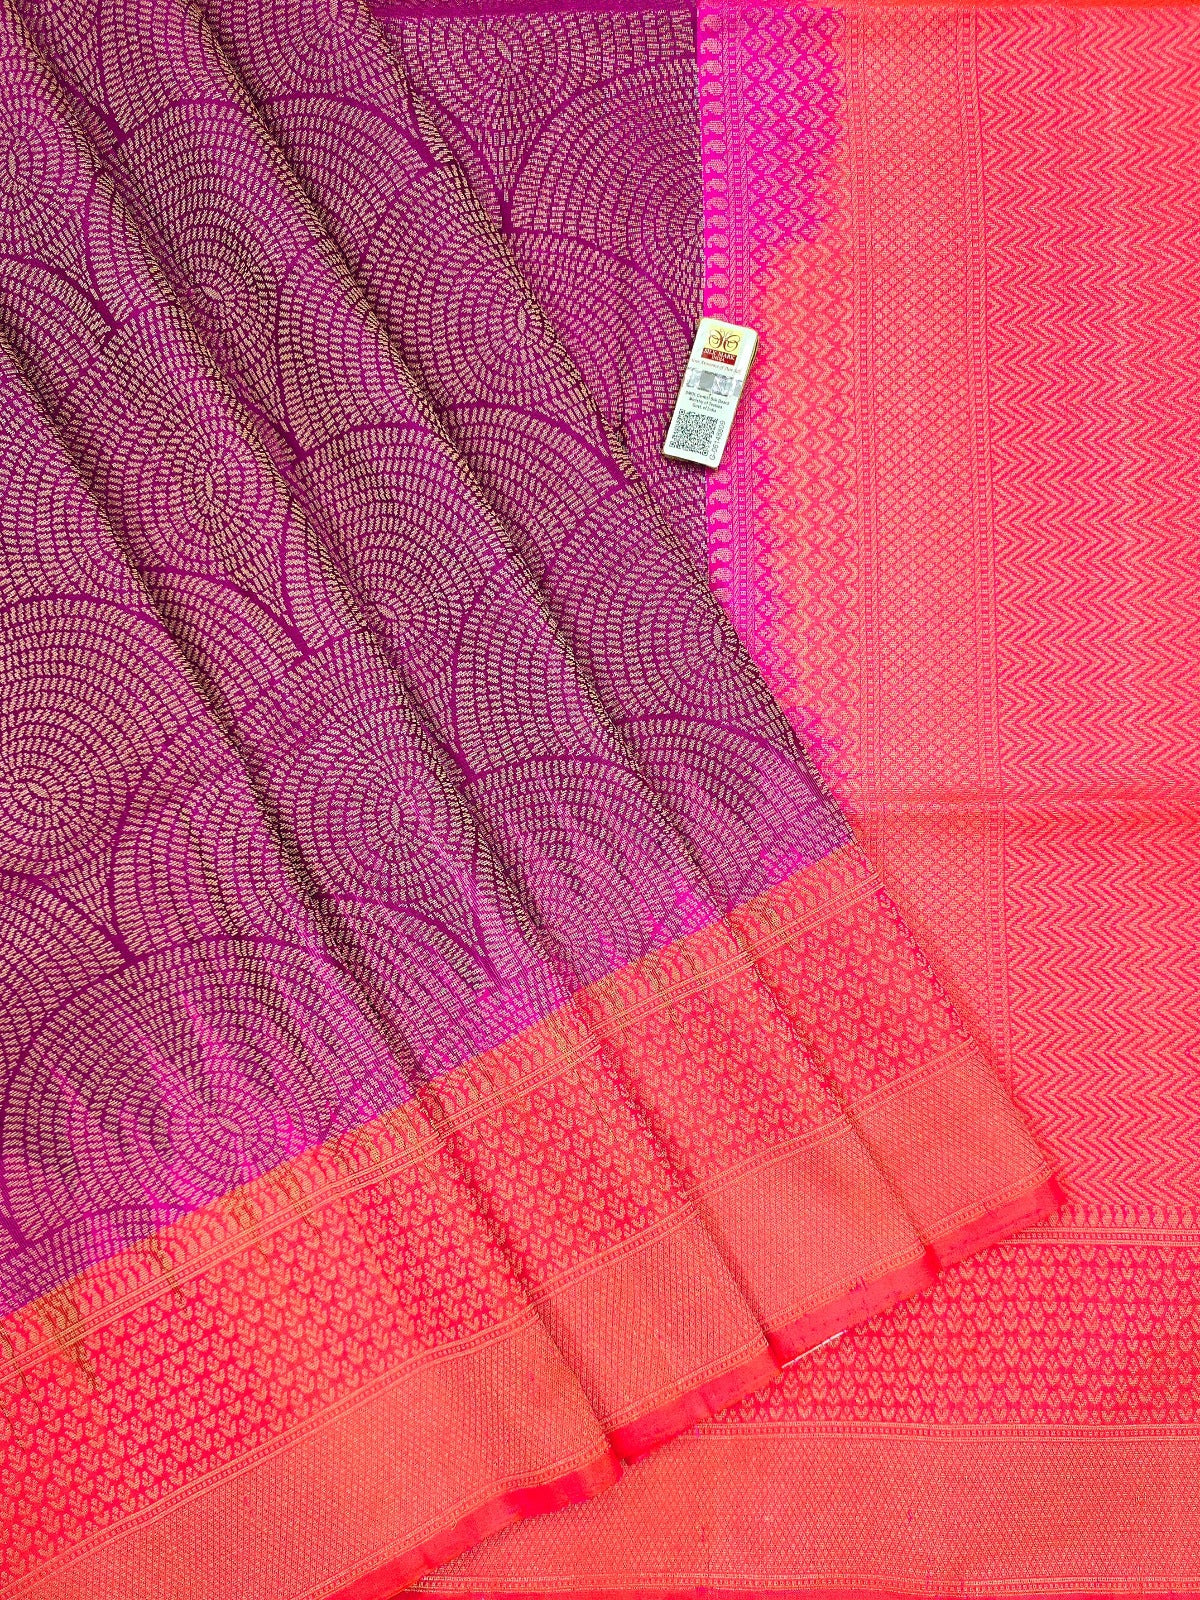 Violet and Orangish Kanchipuram Soft Silk Sarees with Beautiful Pink Border